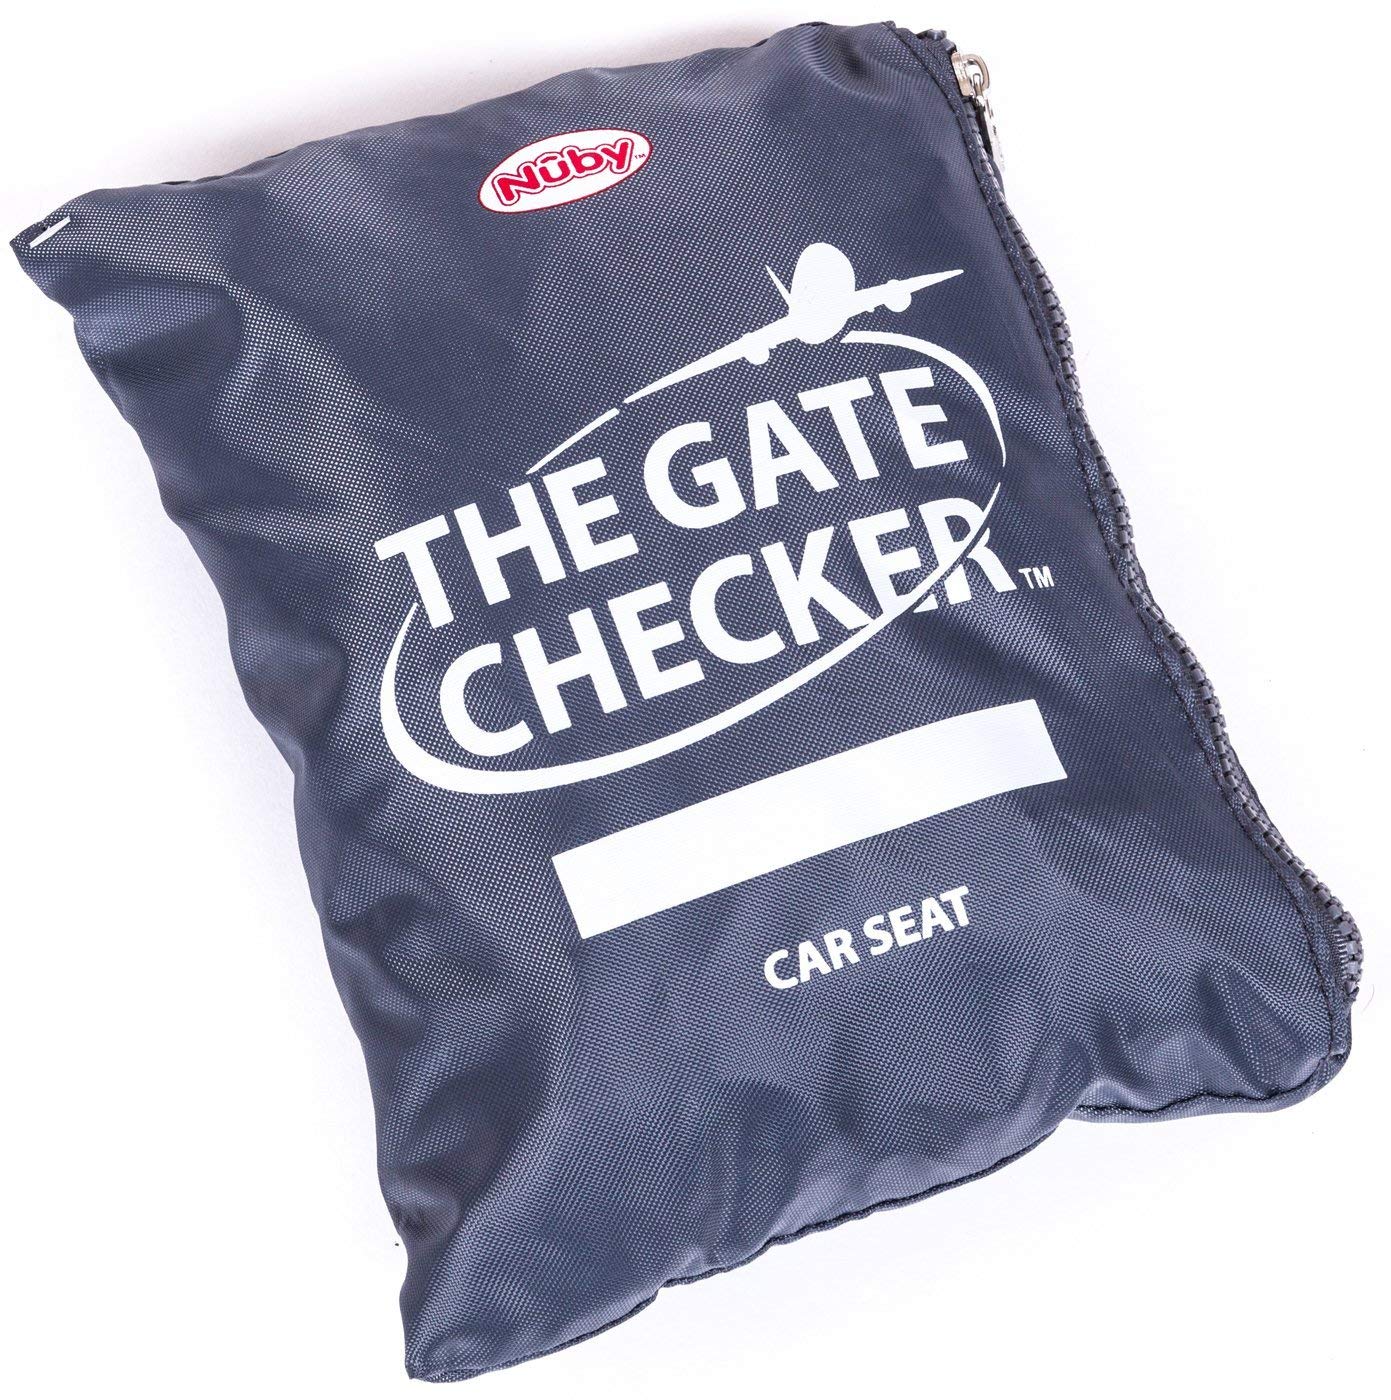 CAR SEAT GATE CHECKER BAG